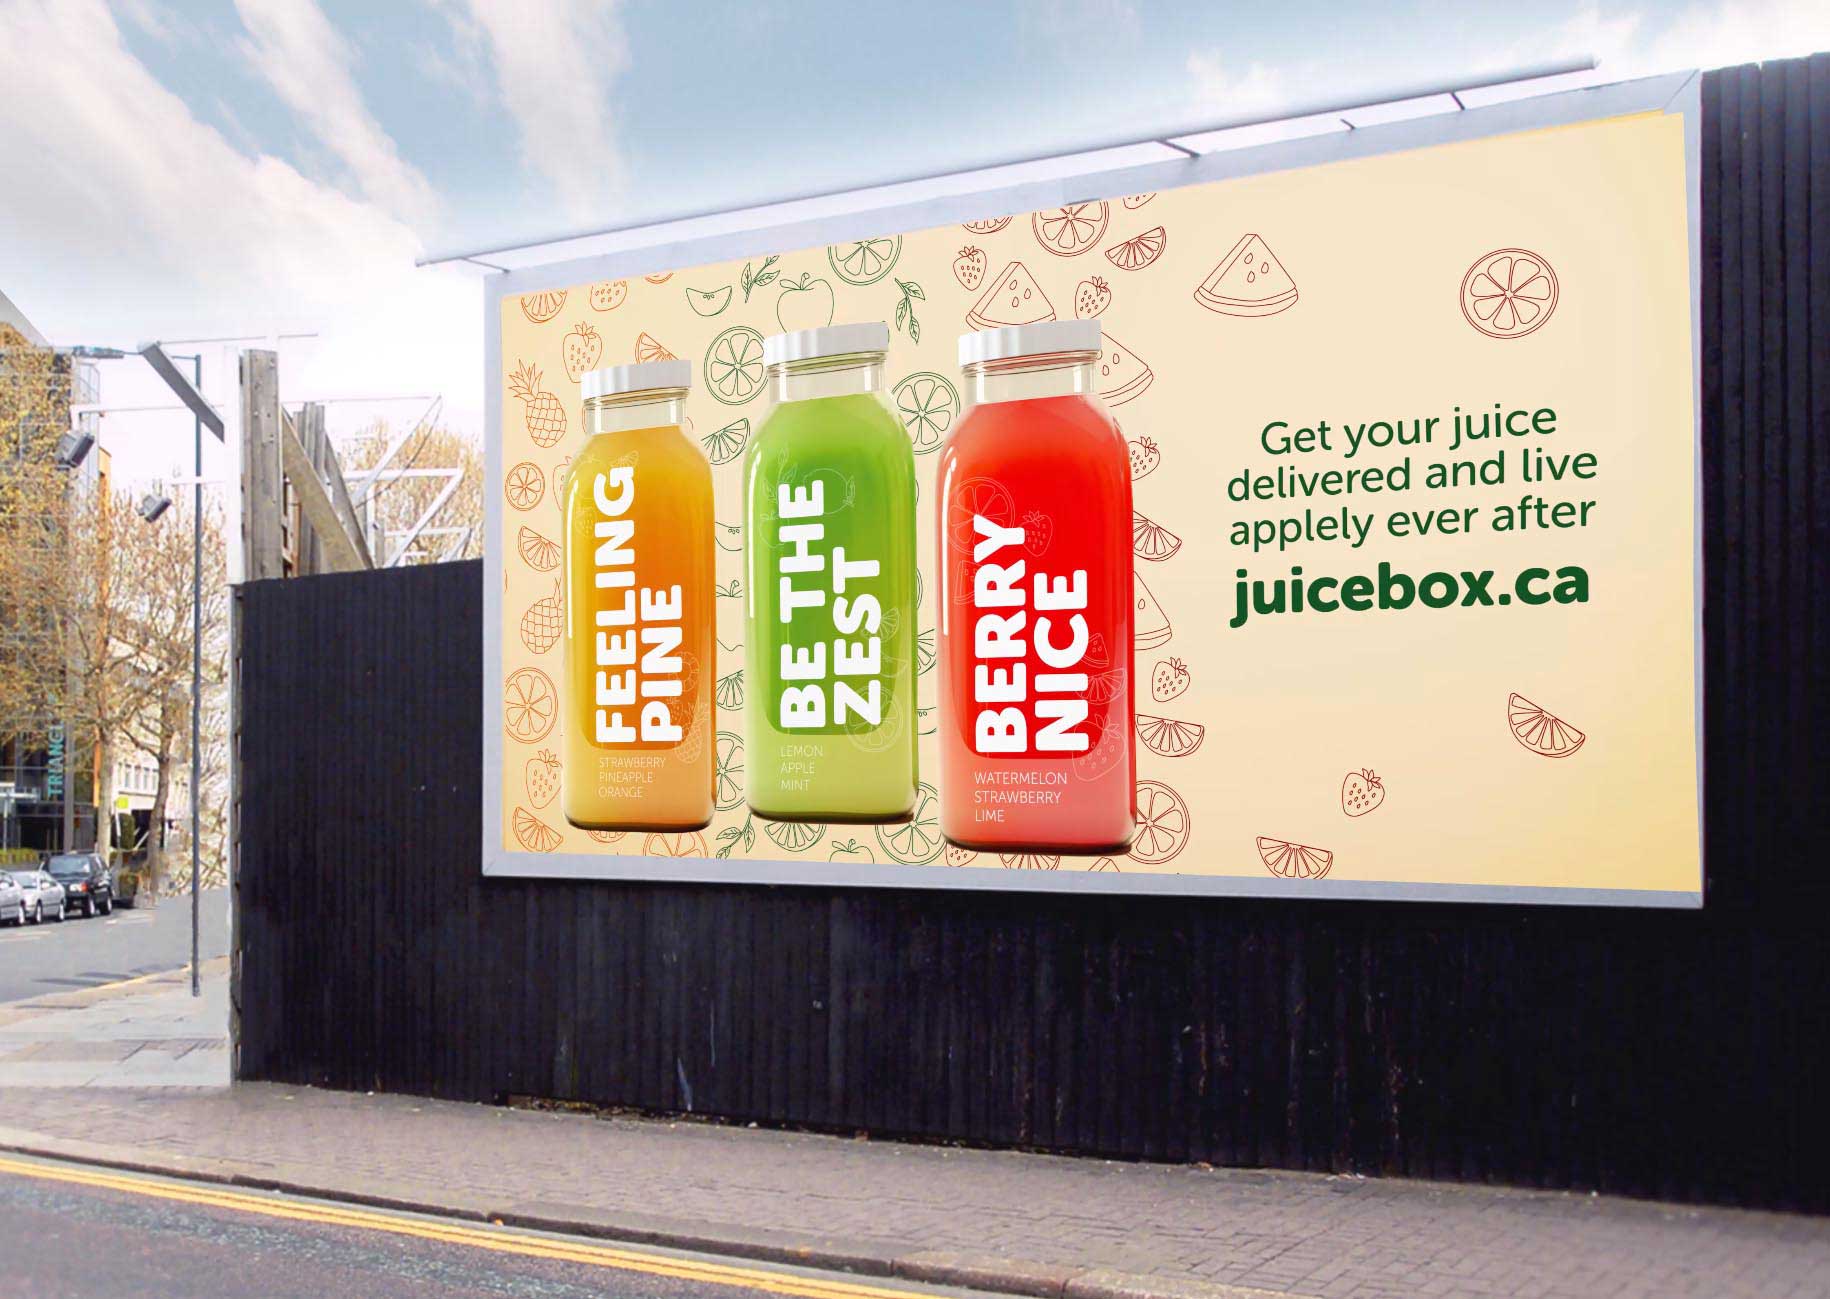 Final juice advertisenment shown on a billboard mockup